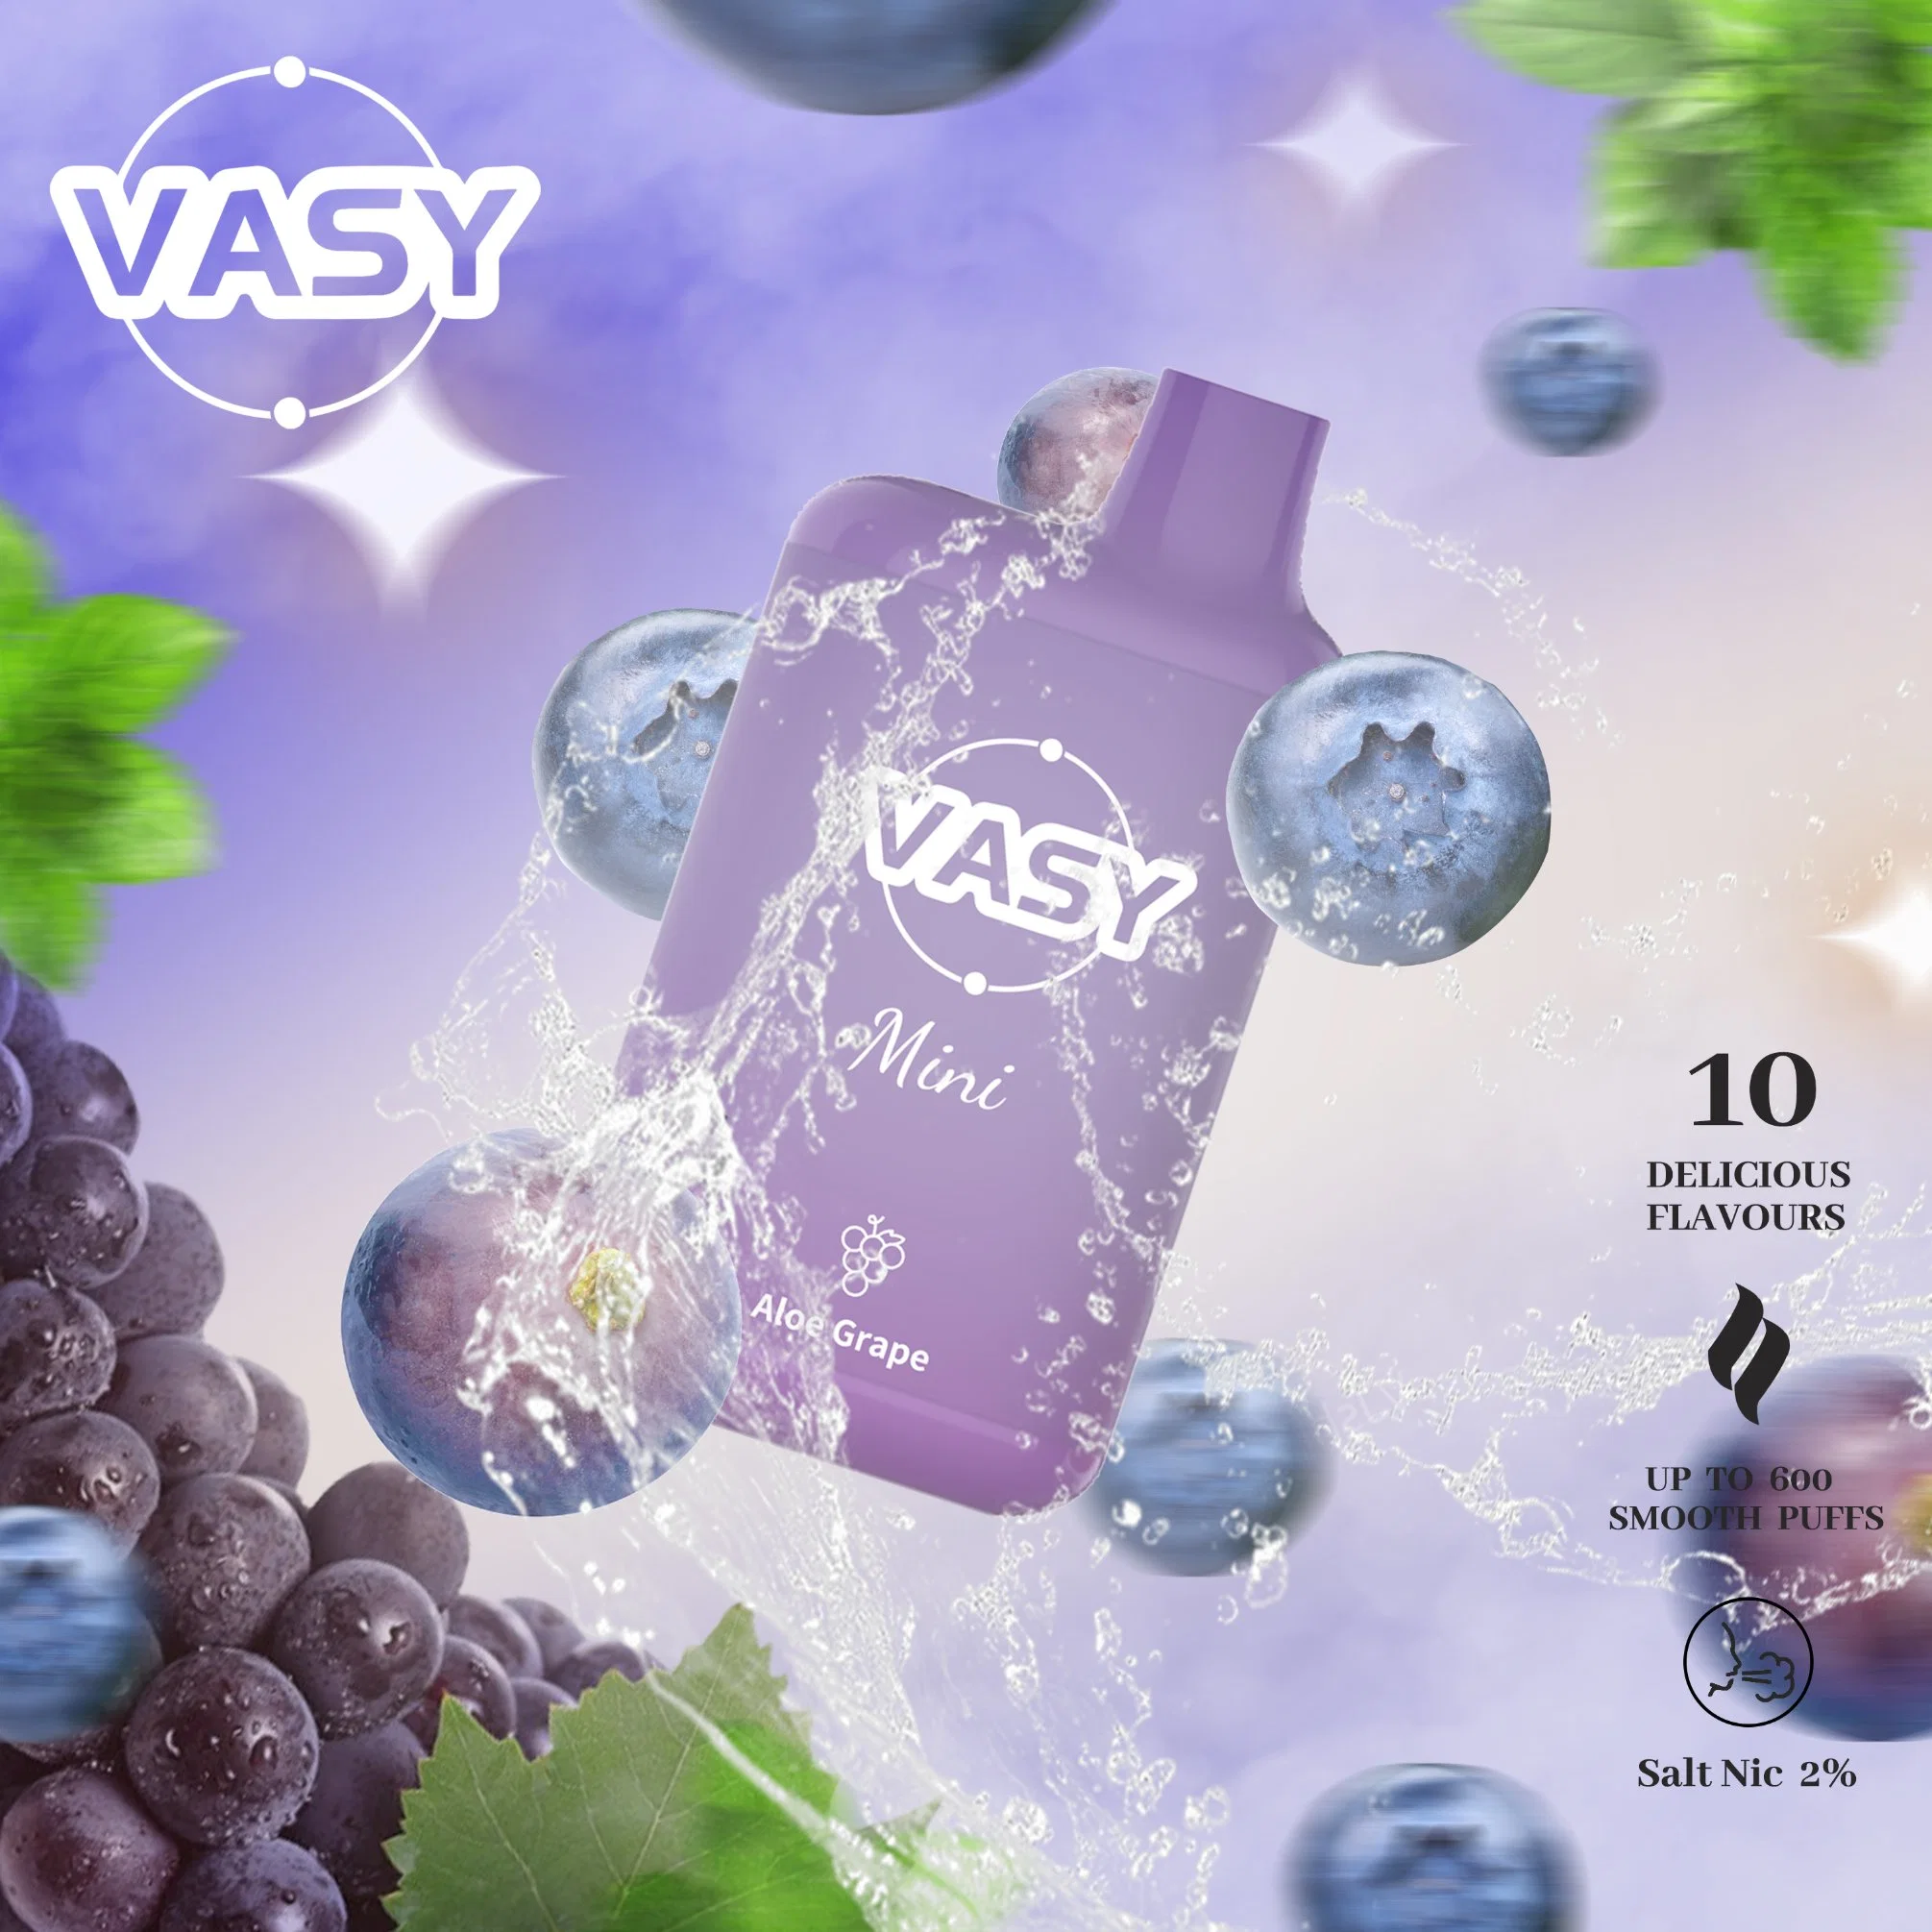 Vasy Crystal tpd Compliance 600 Puffs Großhandel günstige Vape 20mg Nic Einweg-Vape Aus China Factory